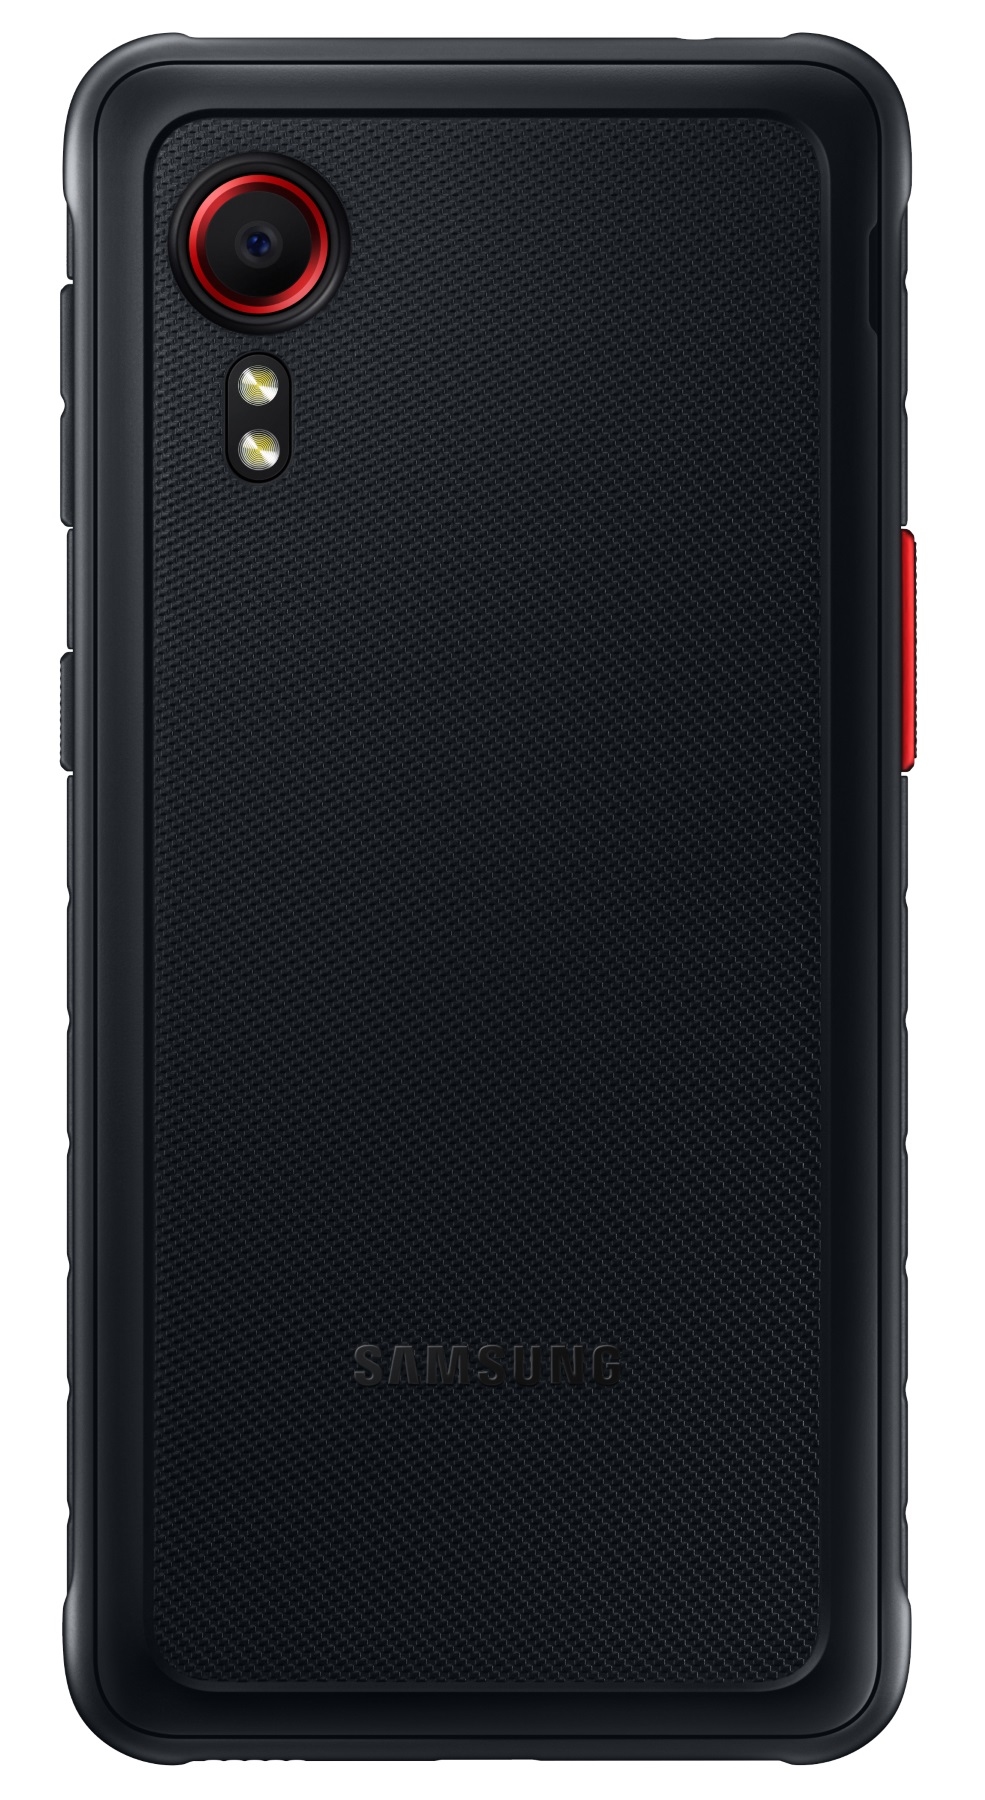 Samsung Galaxy XCover 5 64GB